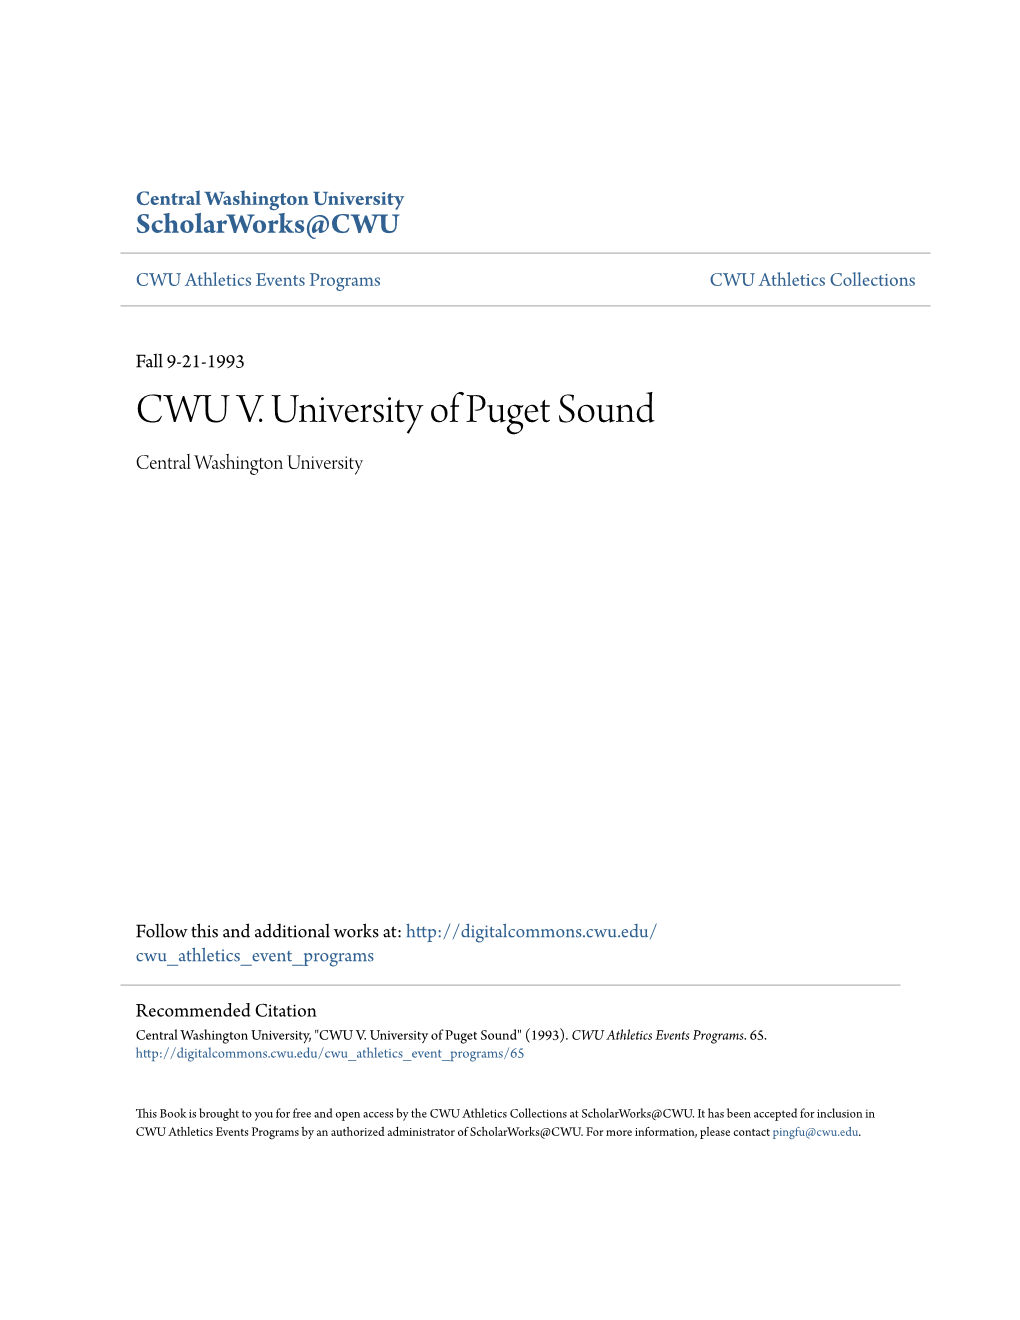 CWU V. University of Puget Sound Central Washington University